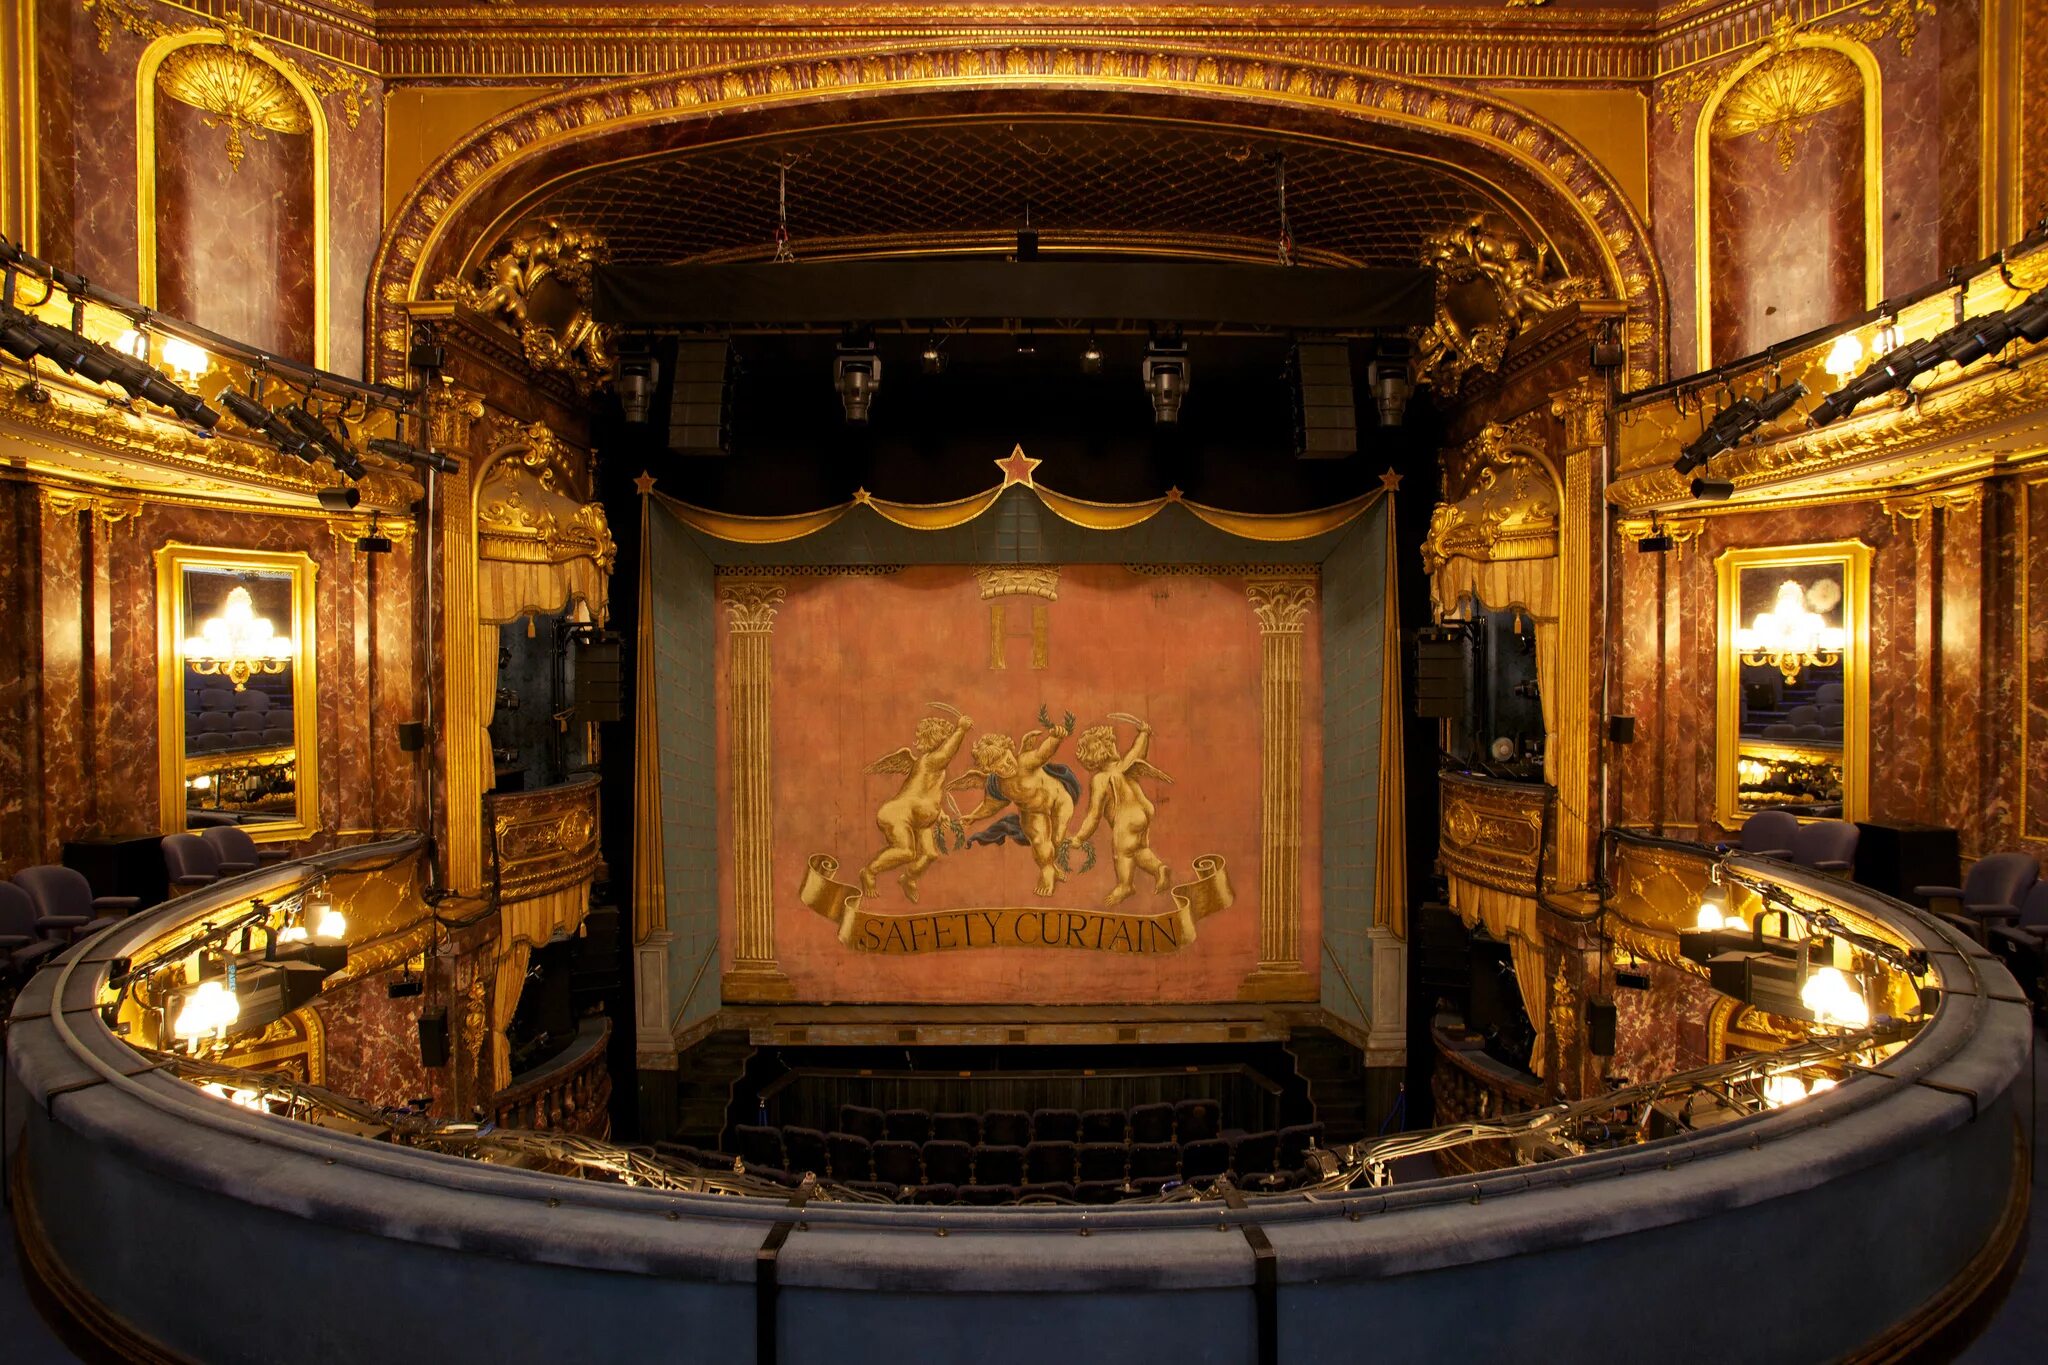 Theatre a lot. Theatre Royal Haymarket. Royal Haymarket театр. Бат Англия Королевский театр. Королевский театр Вестминстер.